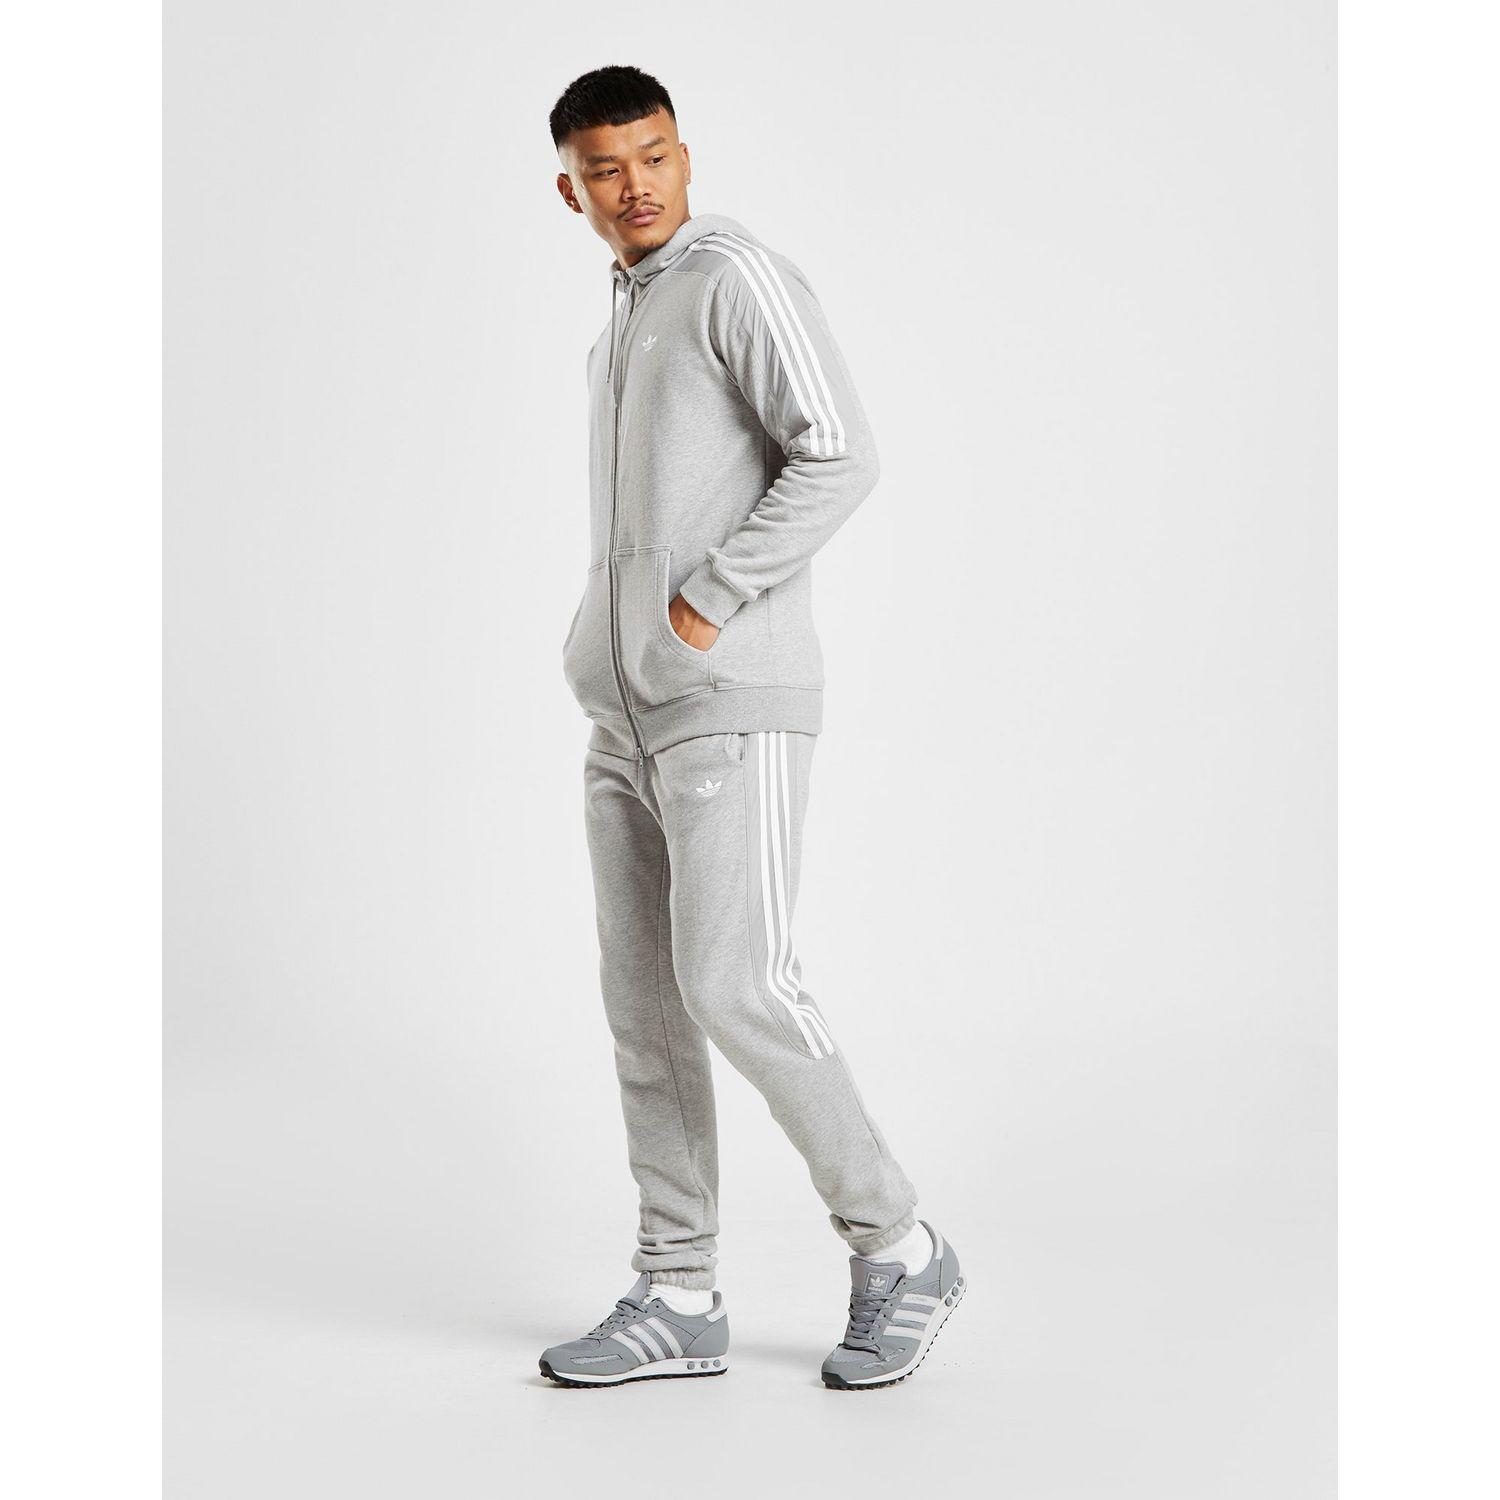 adidas Originals Cotton Radkin Joggers in Grey/White (Gray) for Men - Lyst